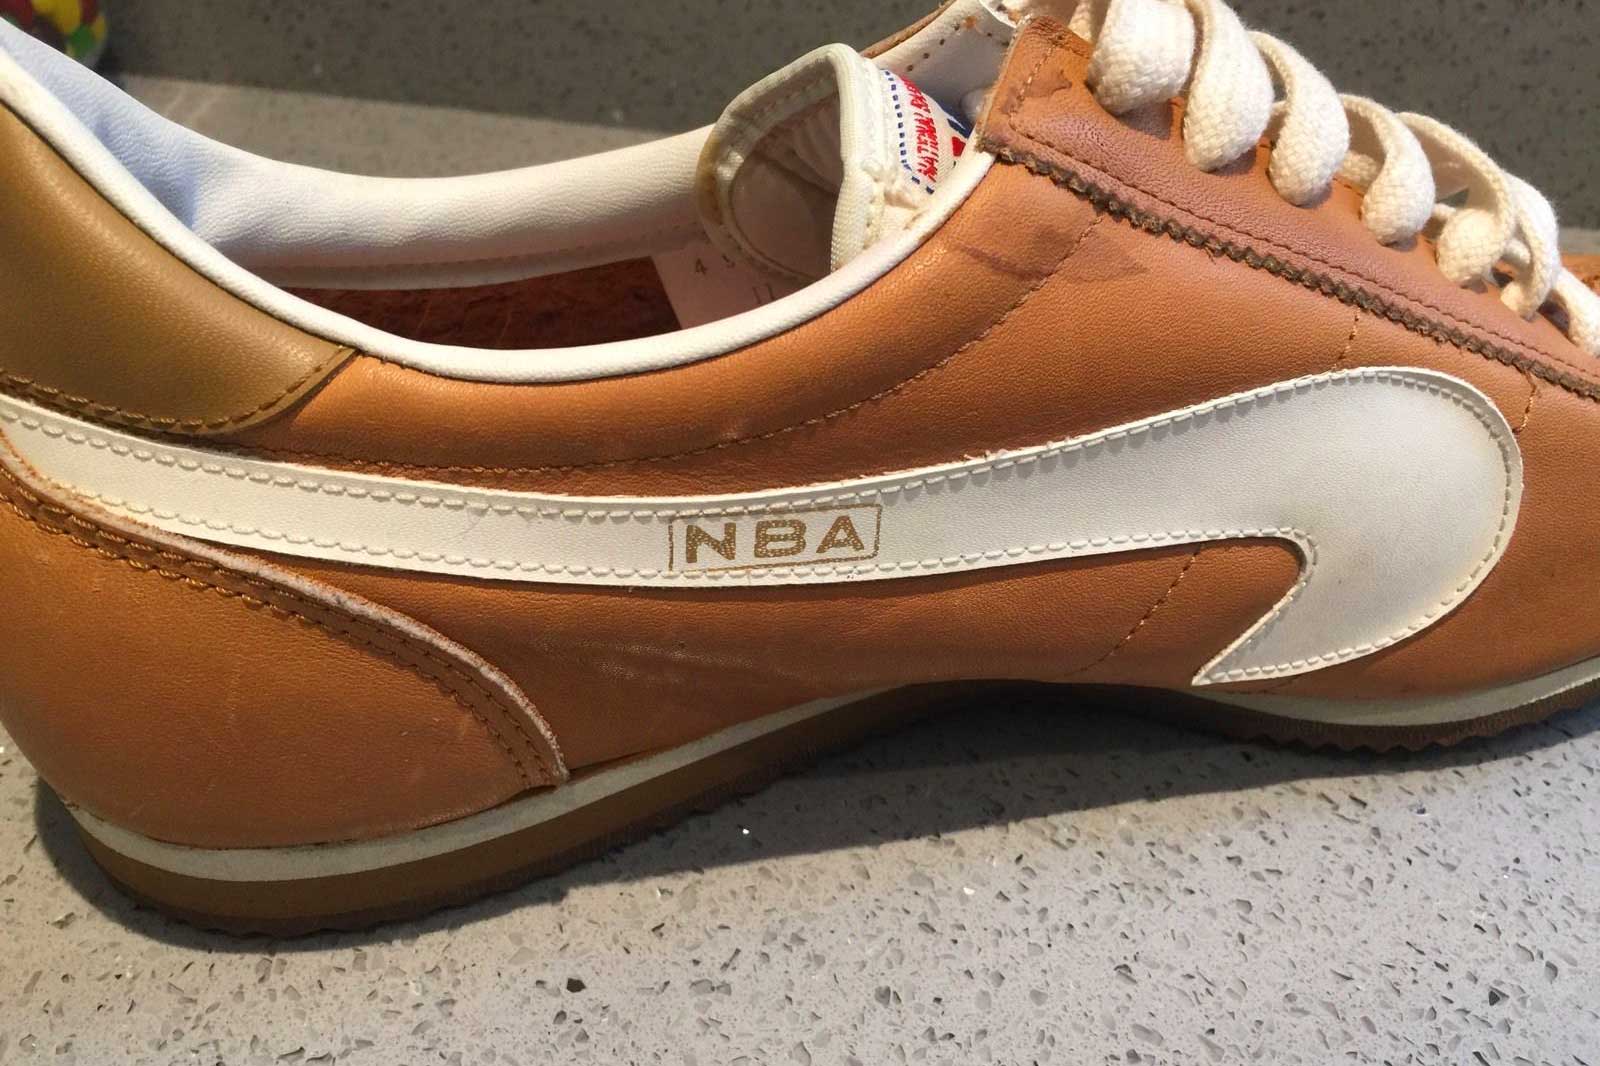 Kinney NBA 1970s Nike Le Village style vintage sneakers detail @ The Deffest